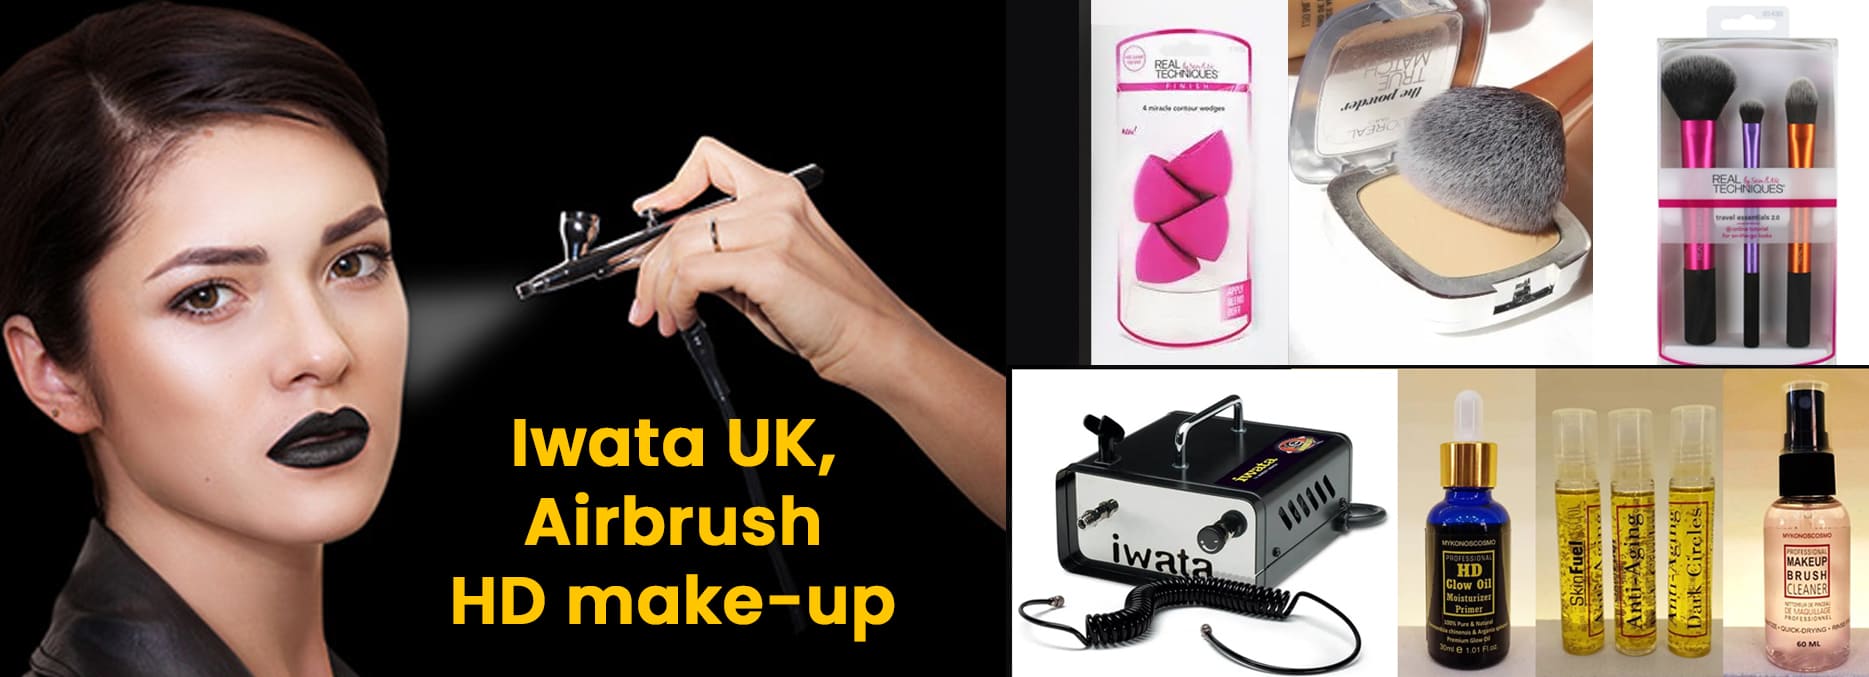 Airbrush HD make-up